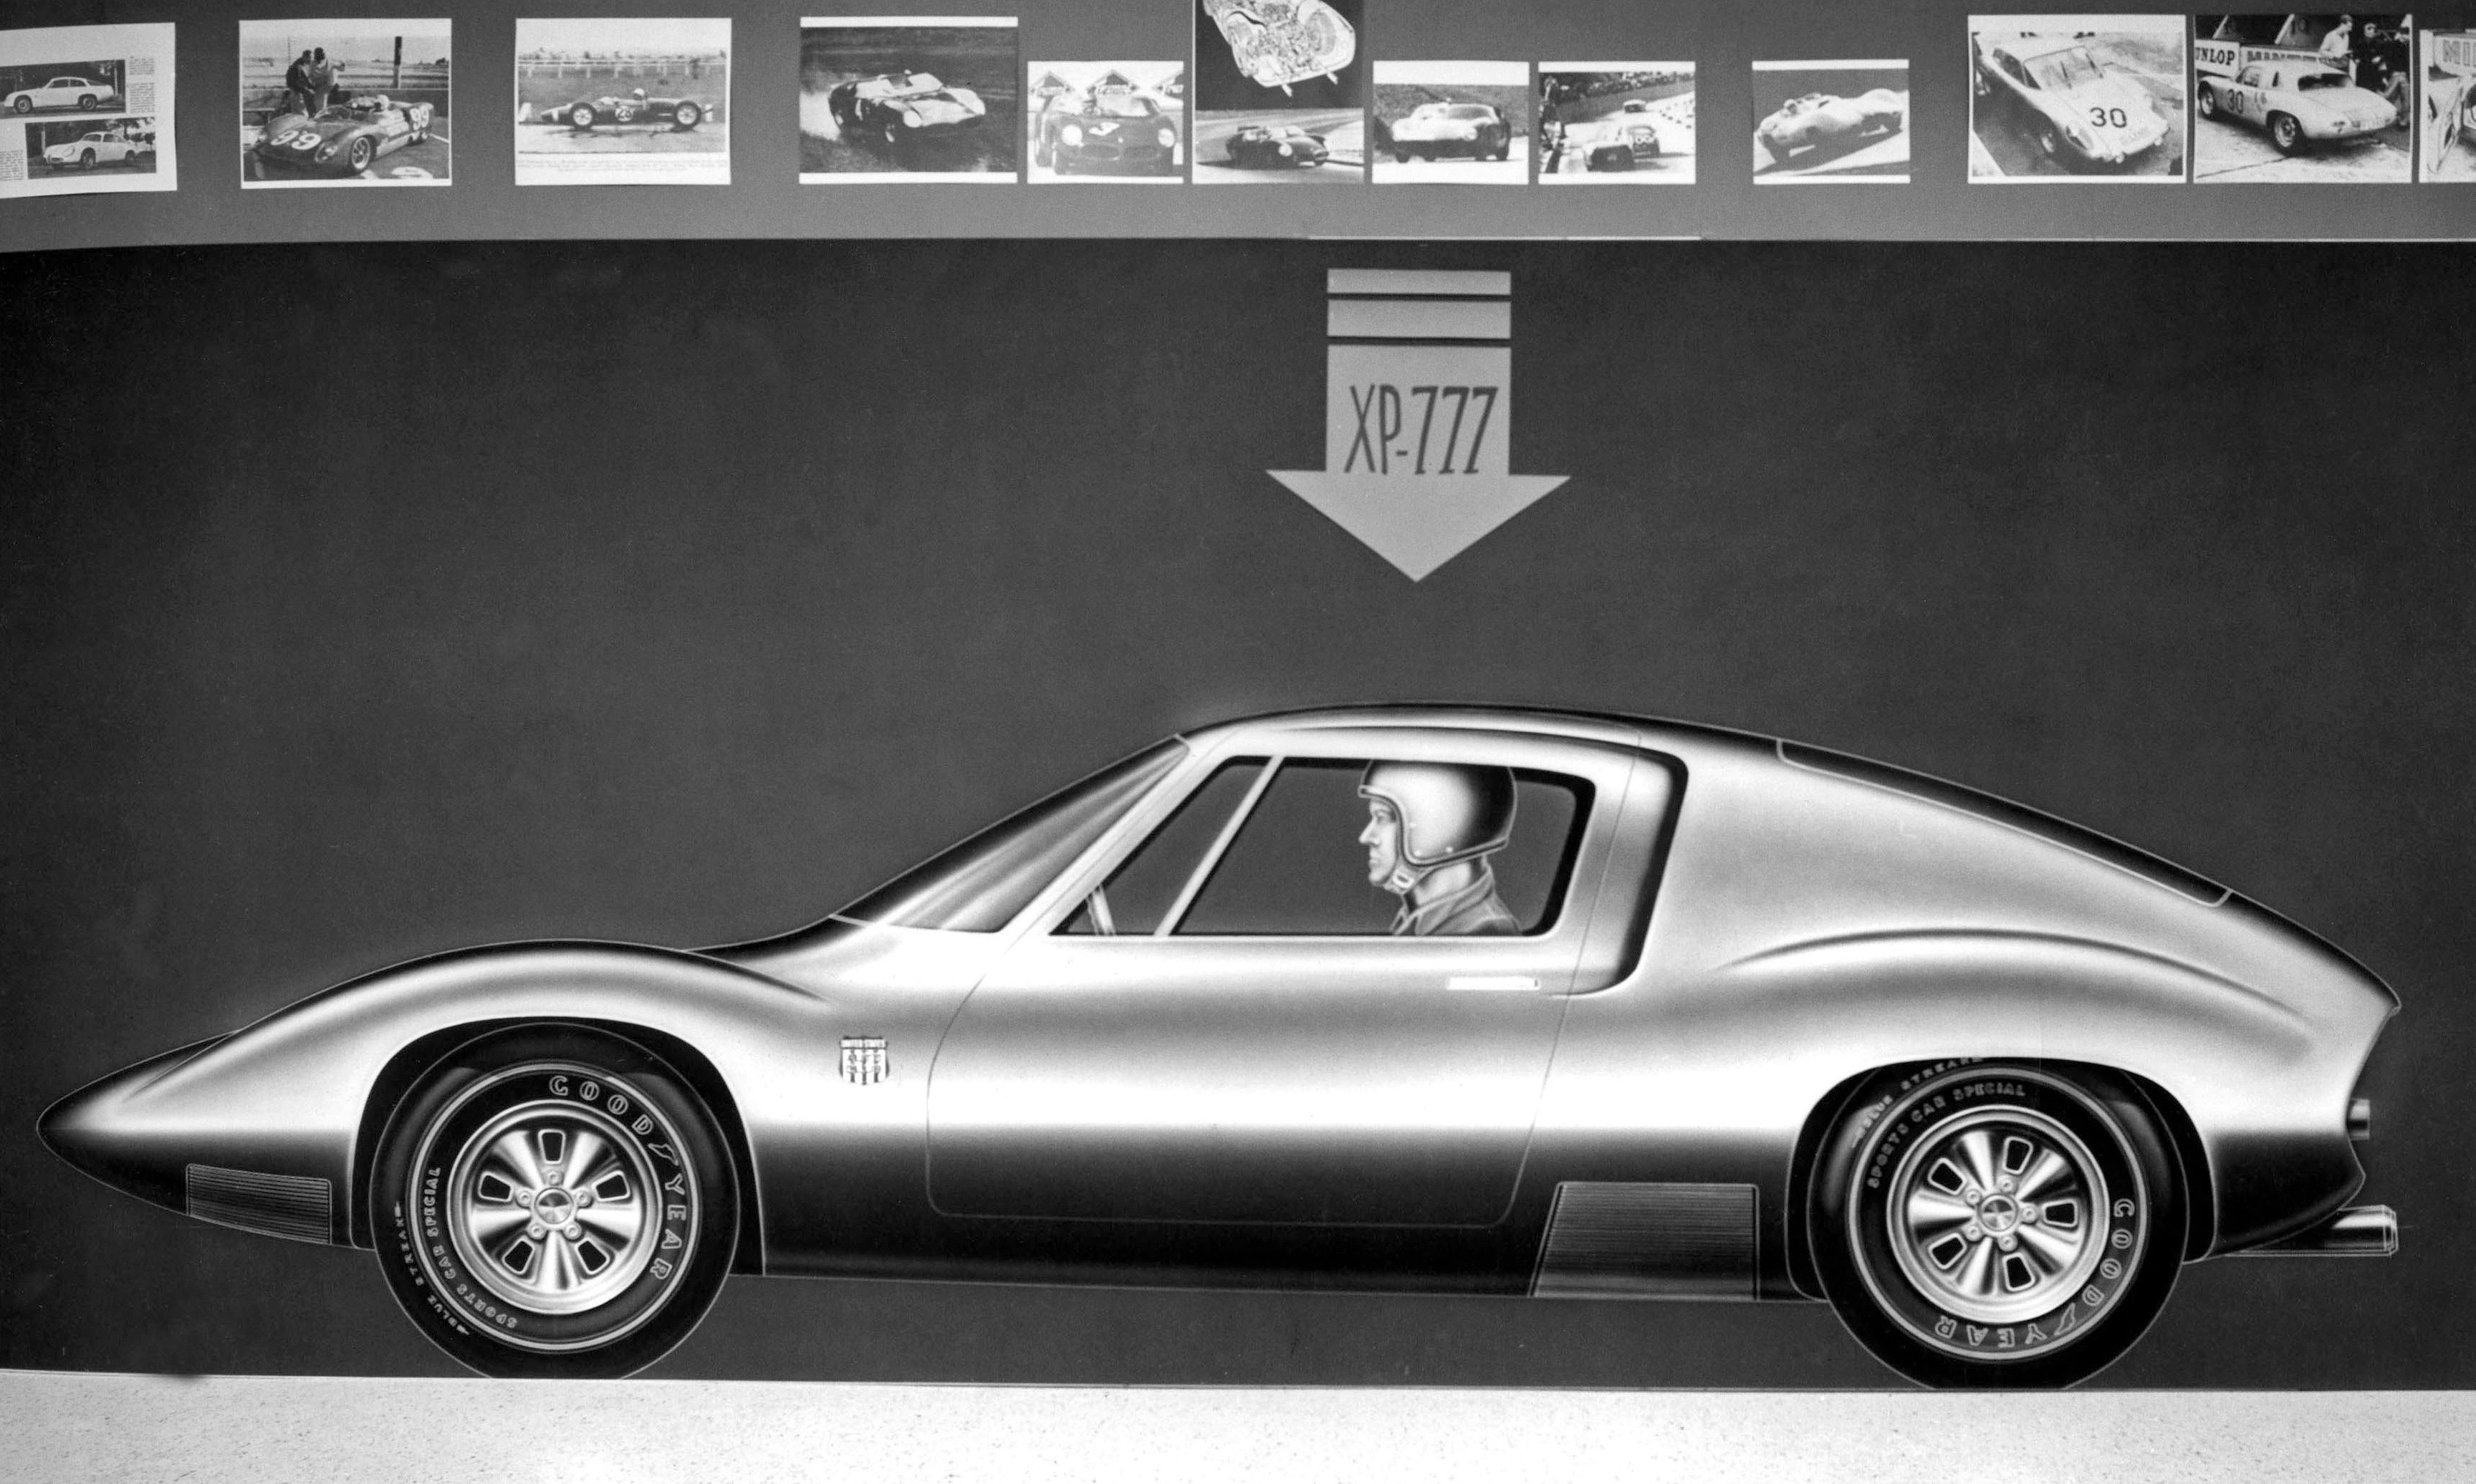 Mid-engine Corvette, Mid-engine Corvette, it is not a new idea, ClassicCars.com Journal